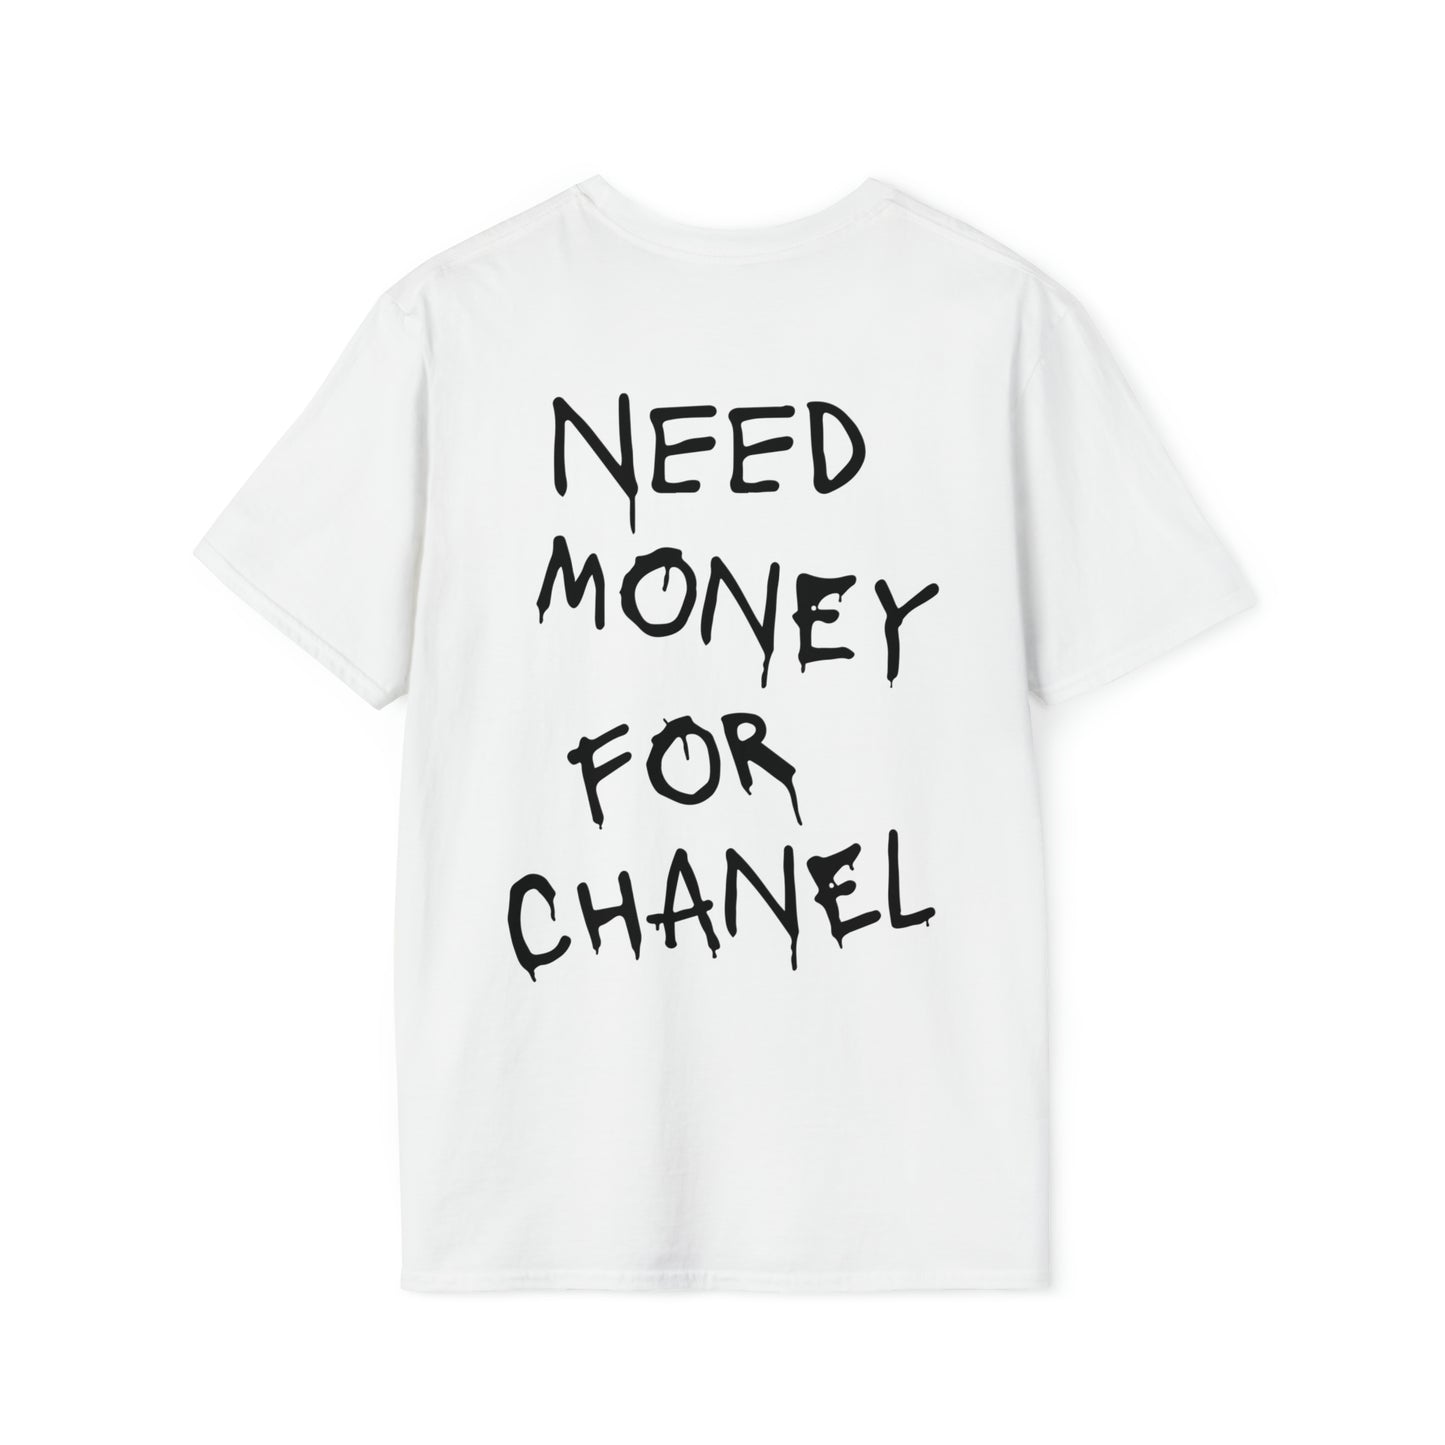 Need Money For Chanel - Unisex